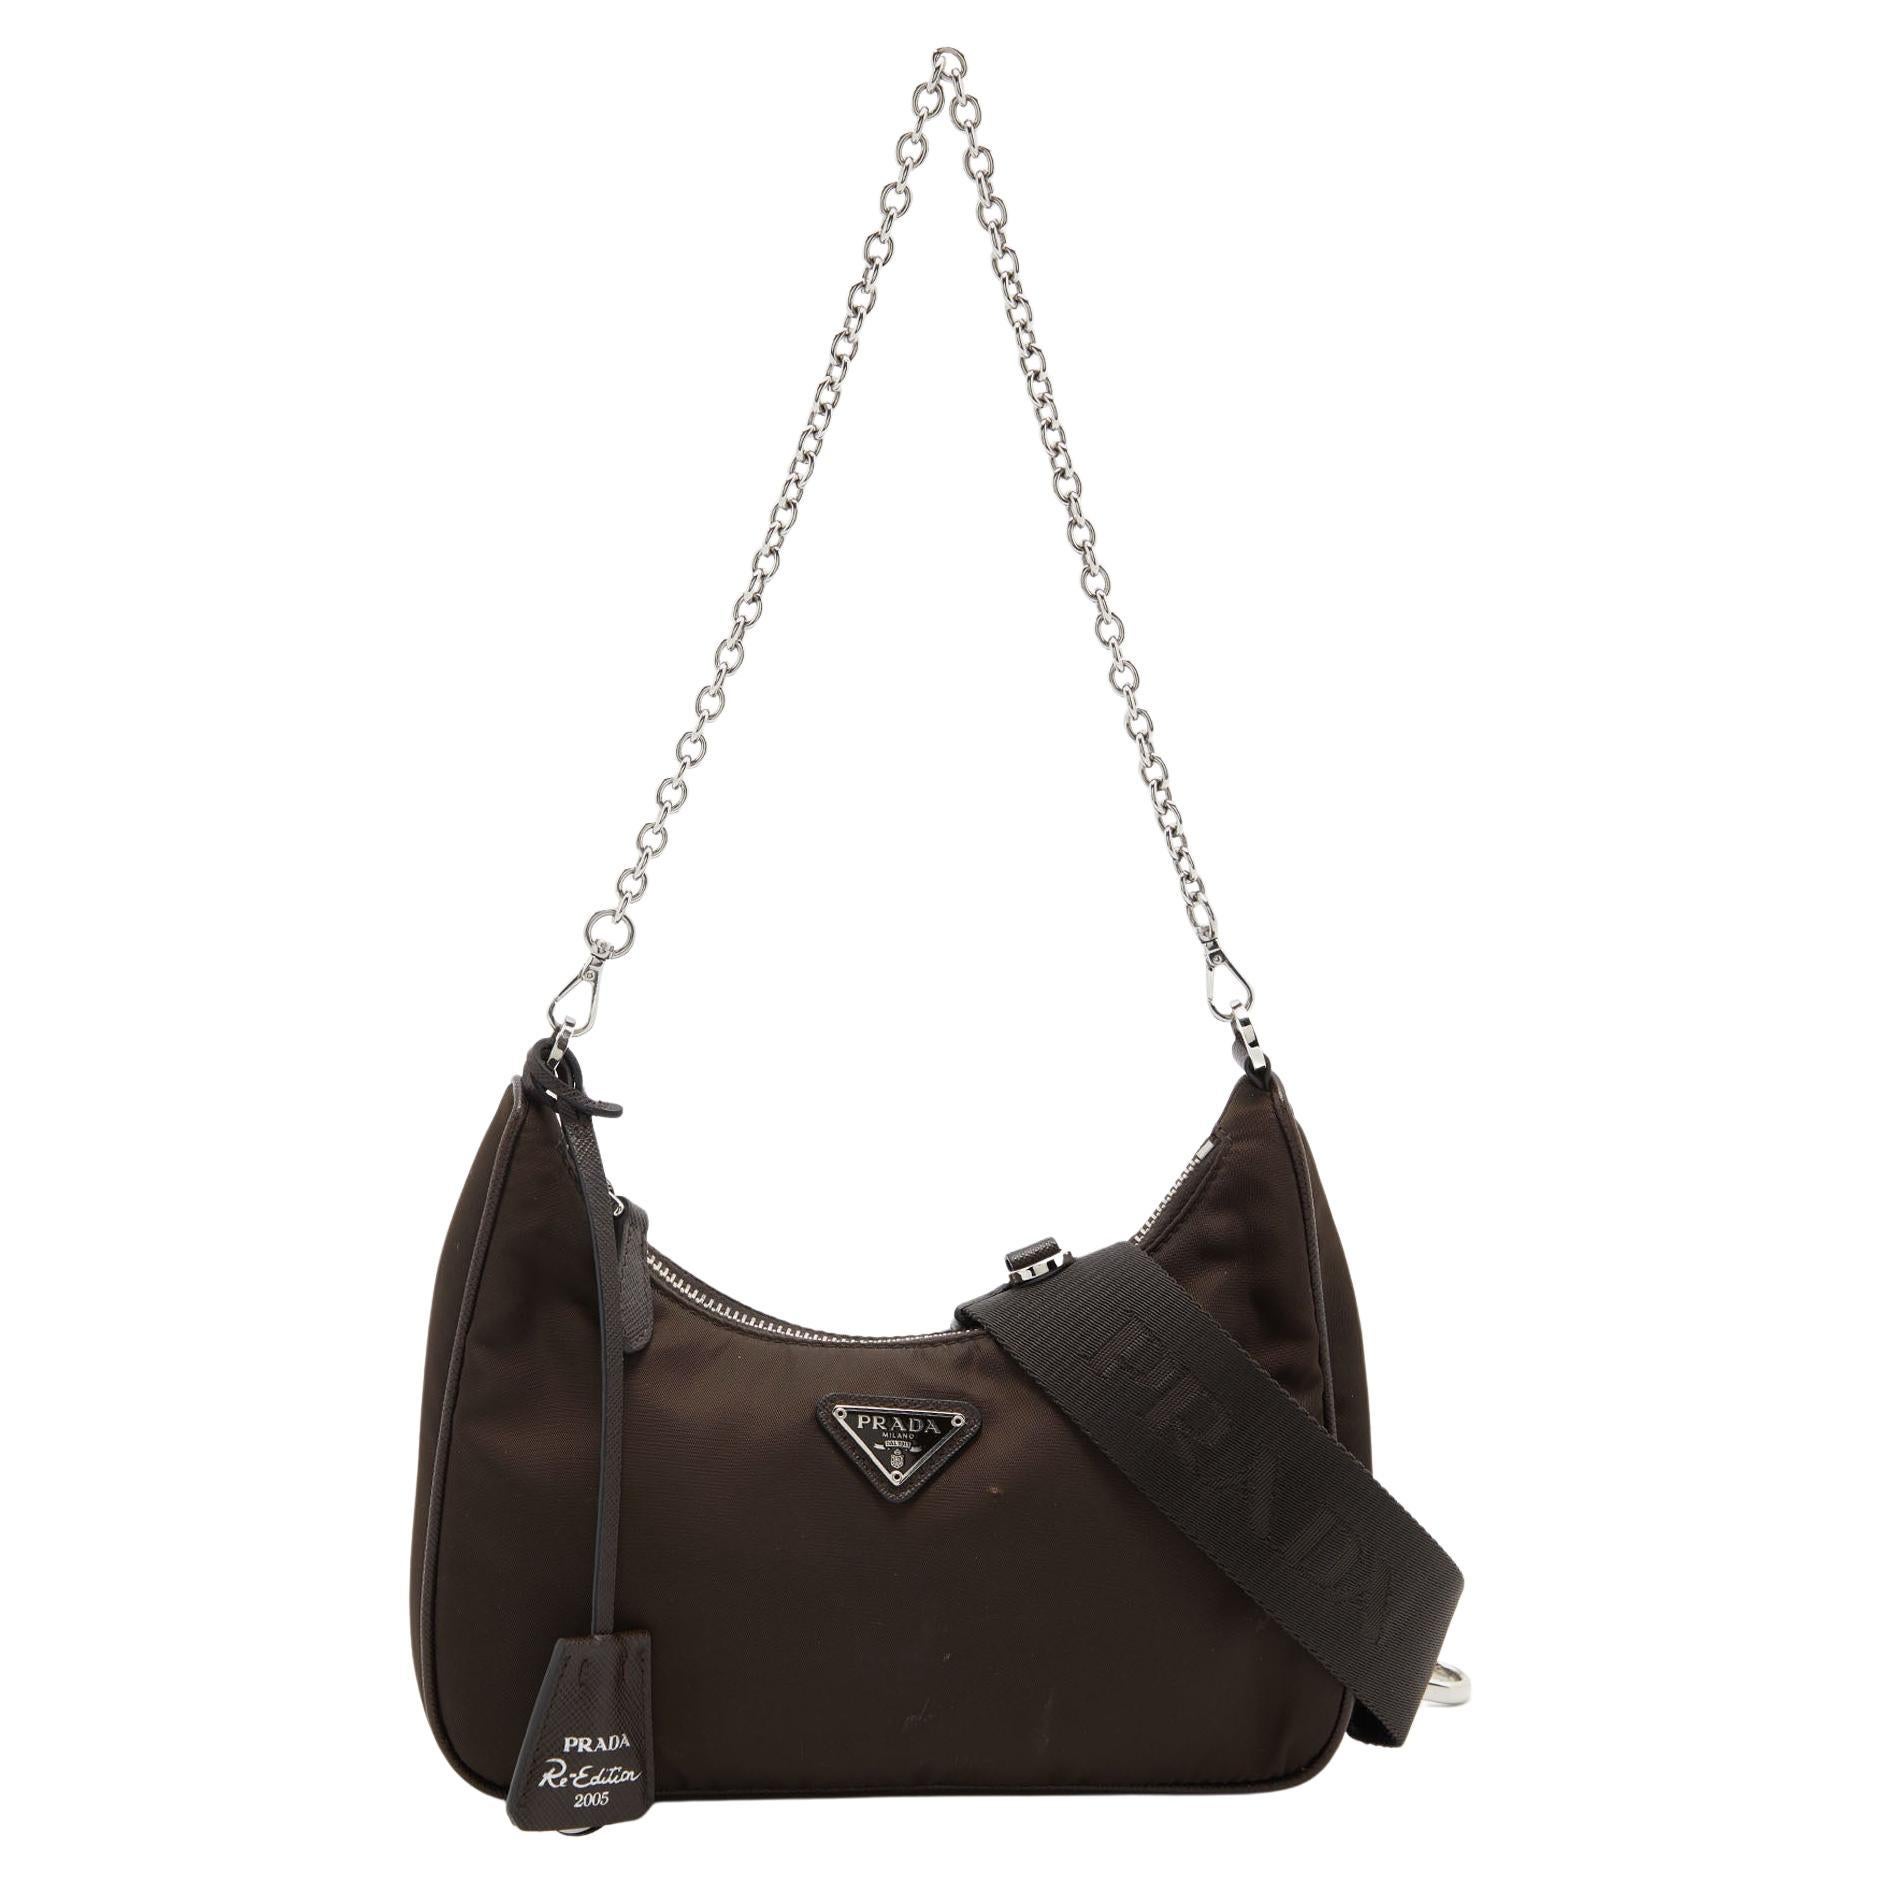 Prada Brown Nylon and Leather Re-Edition 2005 Shoulder Bag